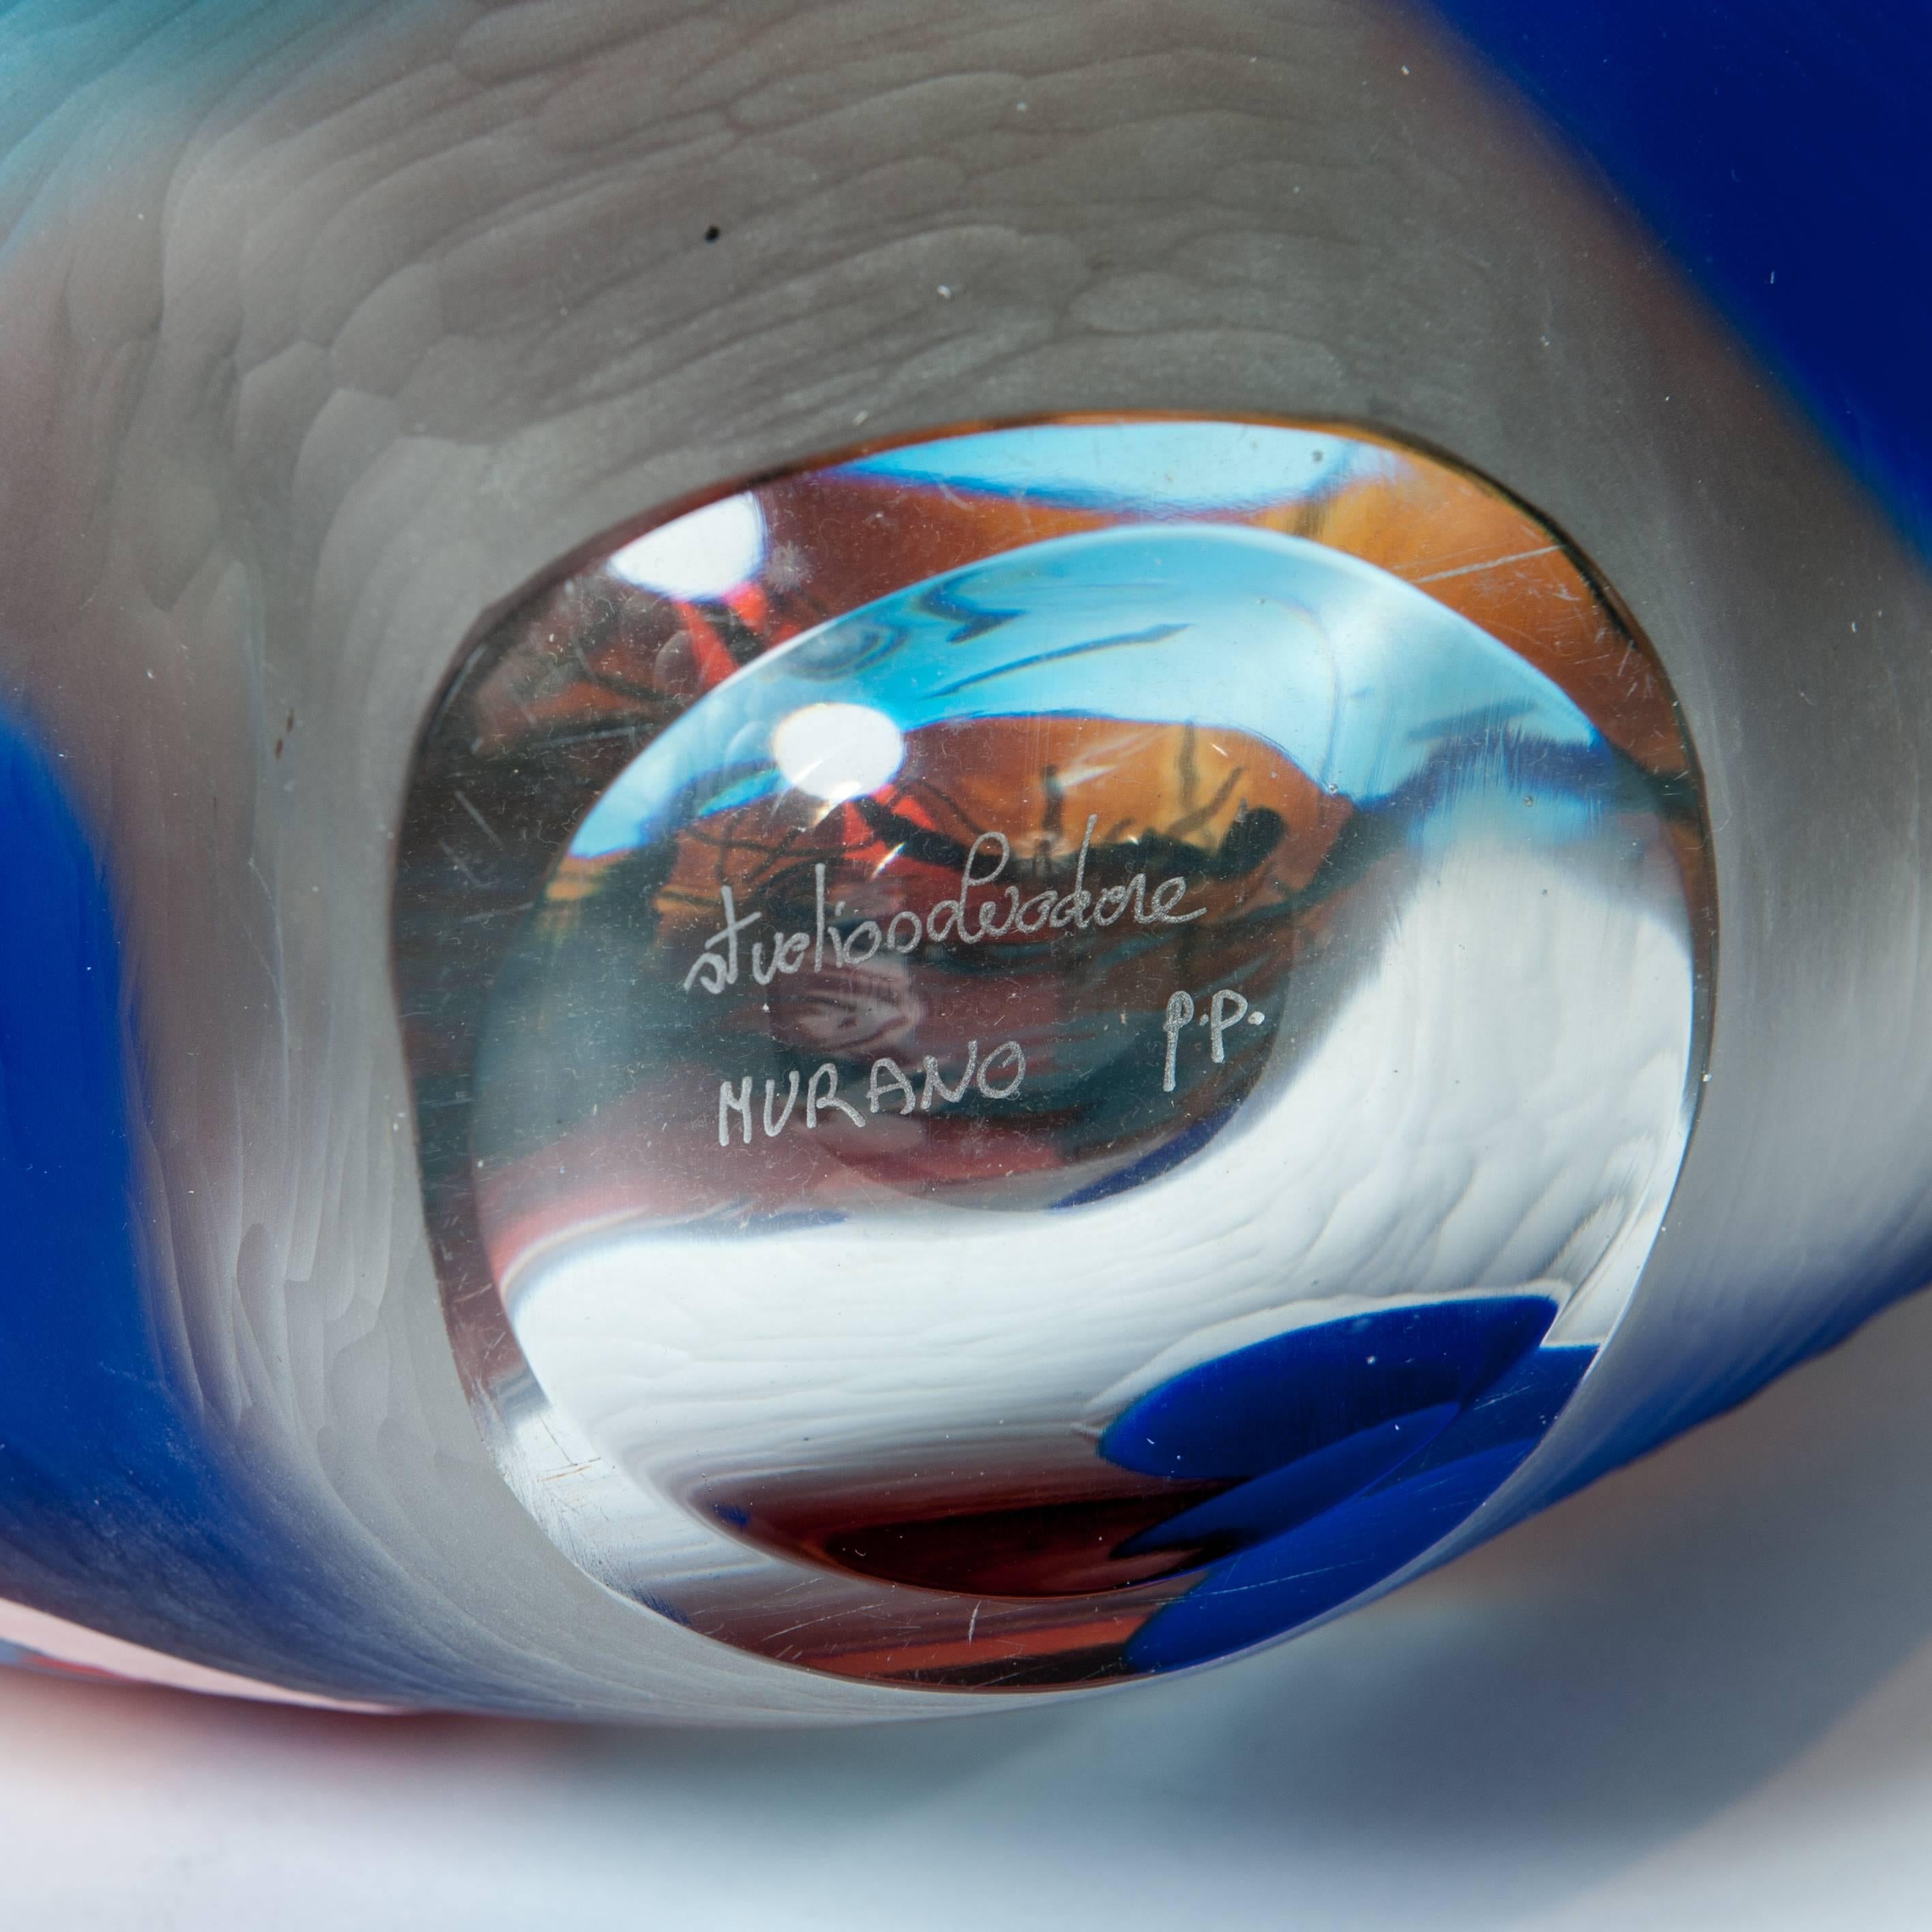 Italian Mouthblown Blue-Brown Murano Glass Vase by Studio Salvadore - Different Technics